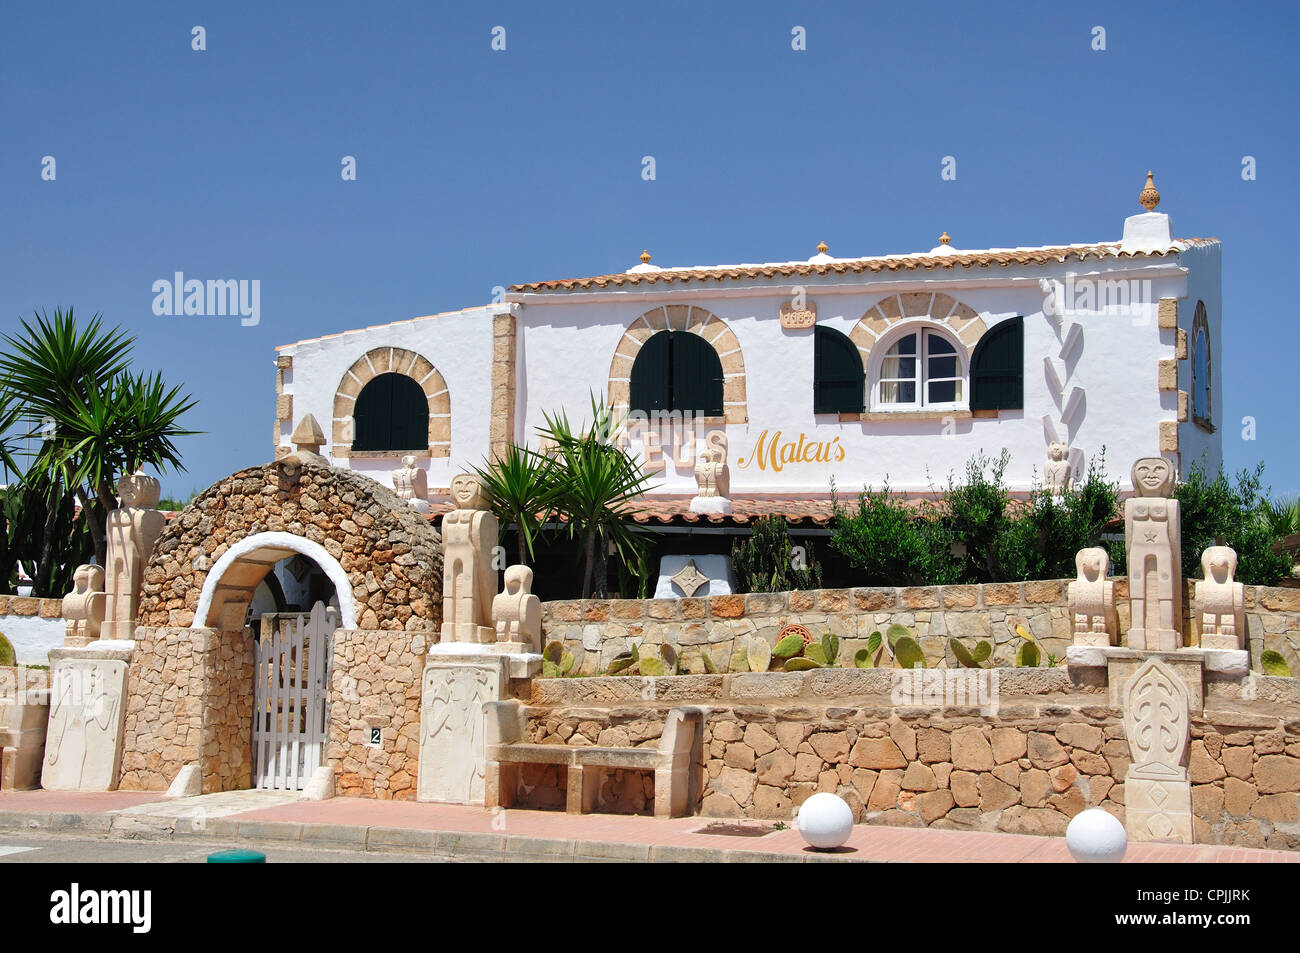 Villa Mateus, Cala Blanca, Menorca, Balearic Islands, Spain Stock Photo